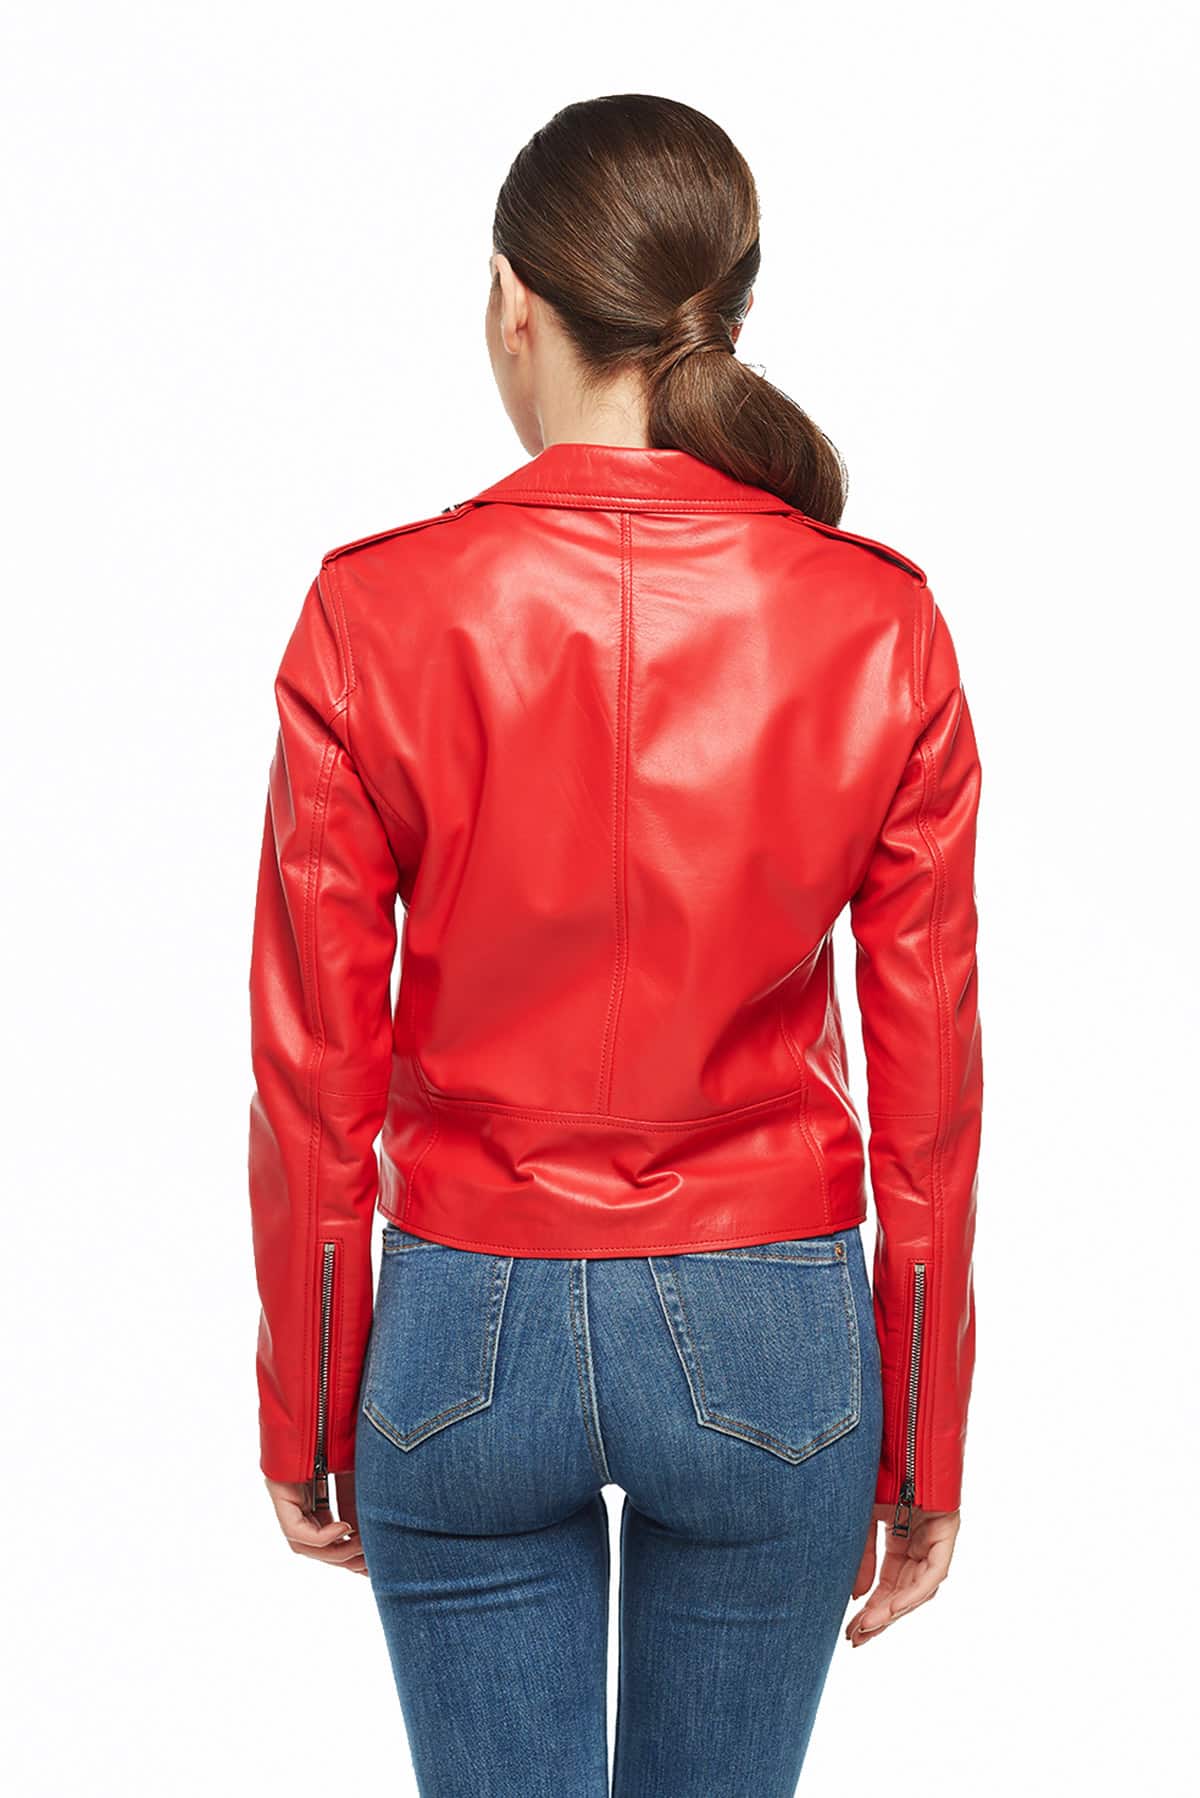 Shiela Brando Style Red Women’s Leather Jacket – UFS